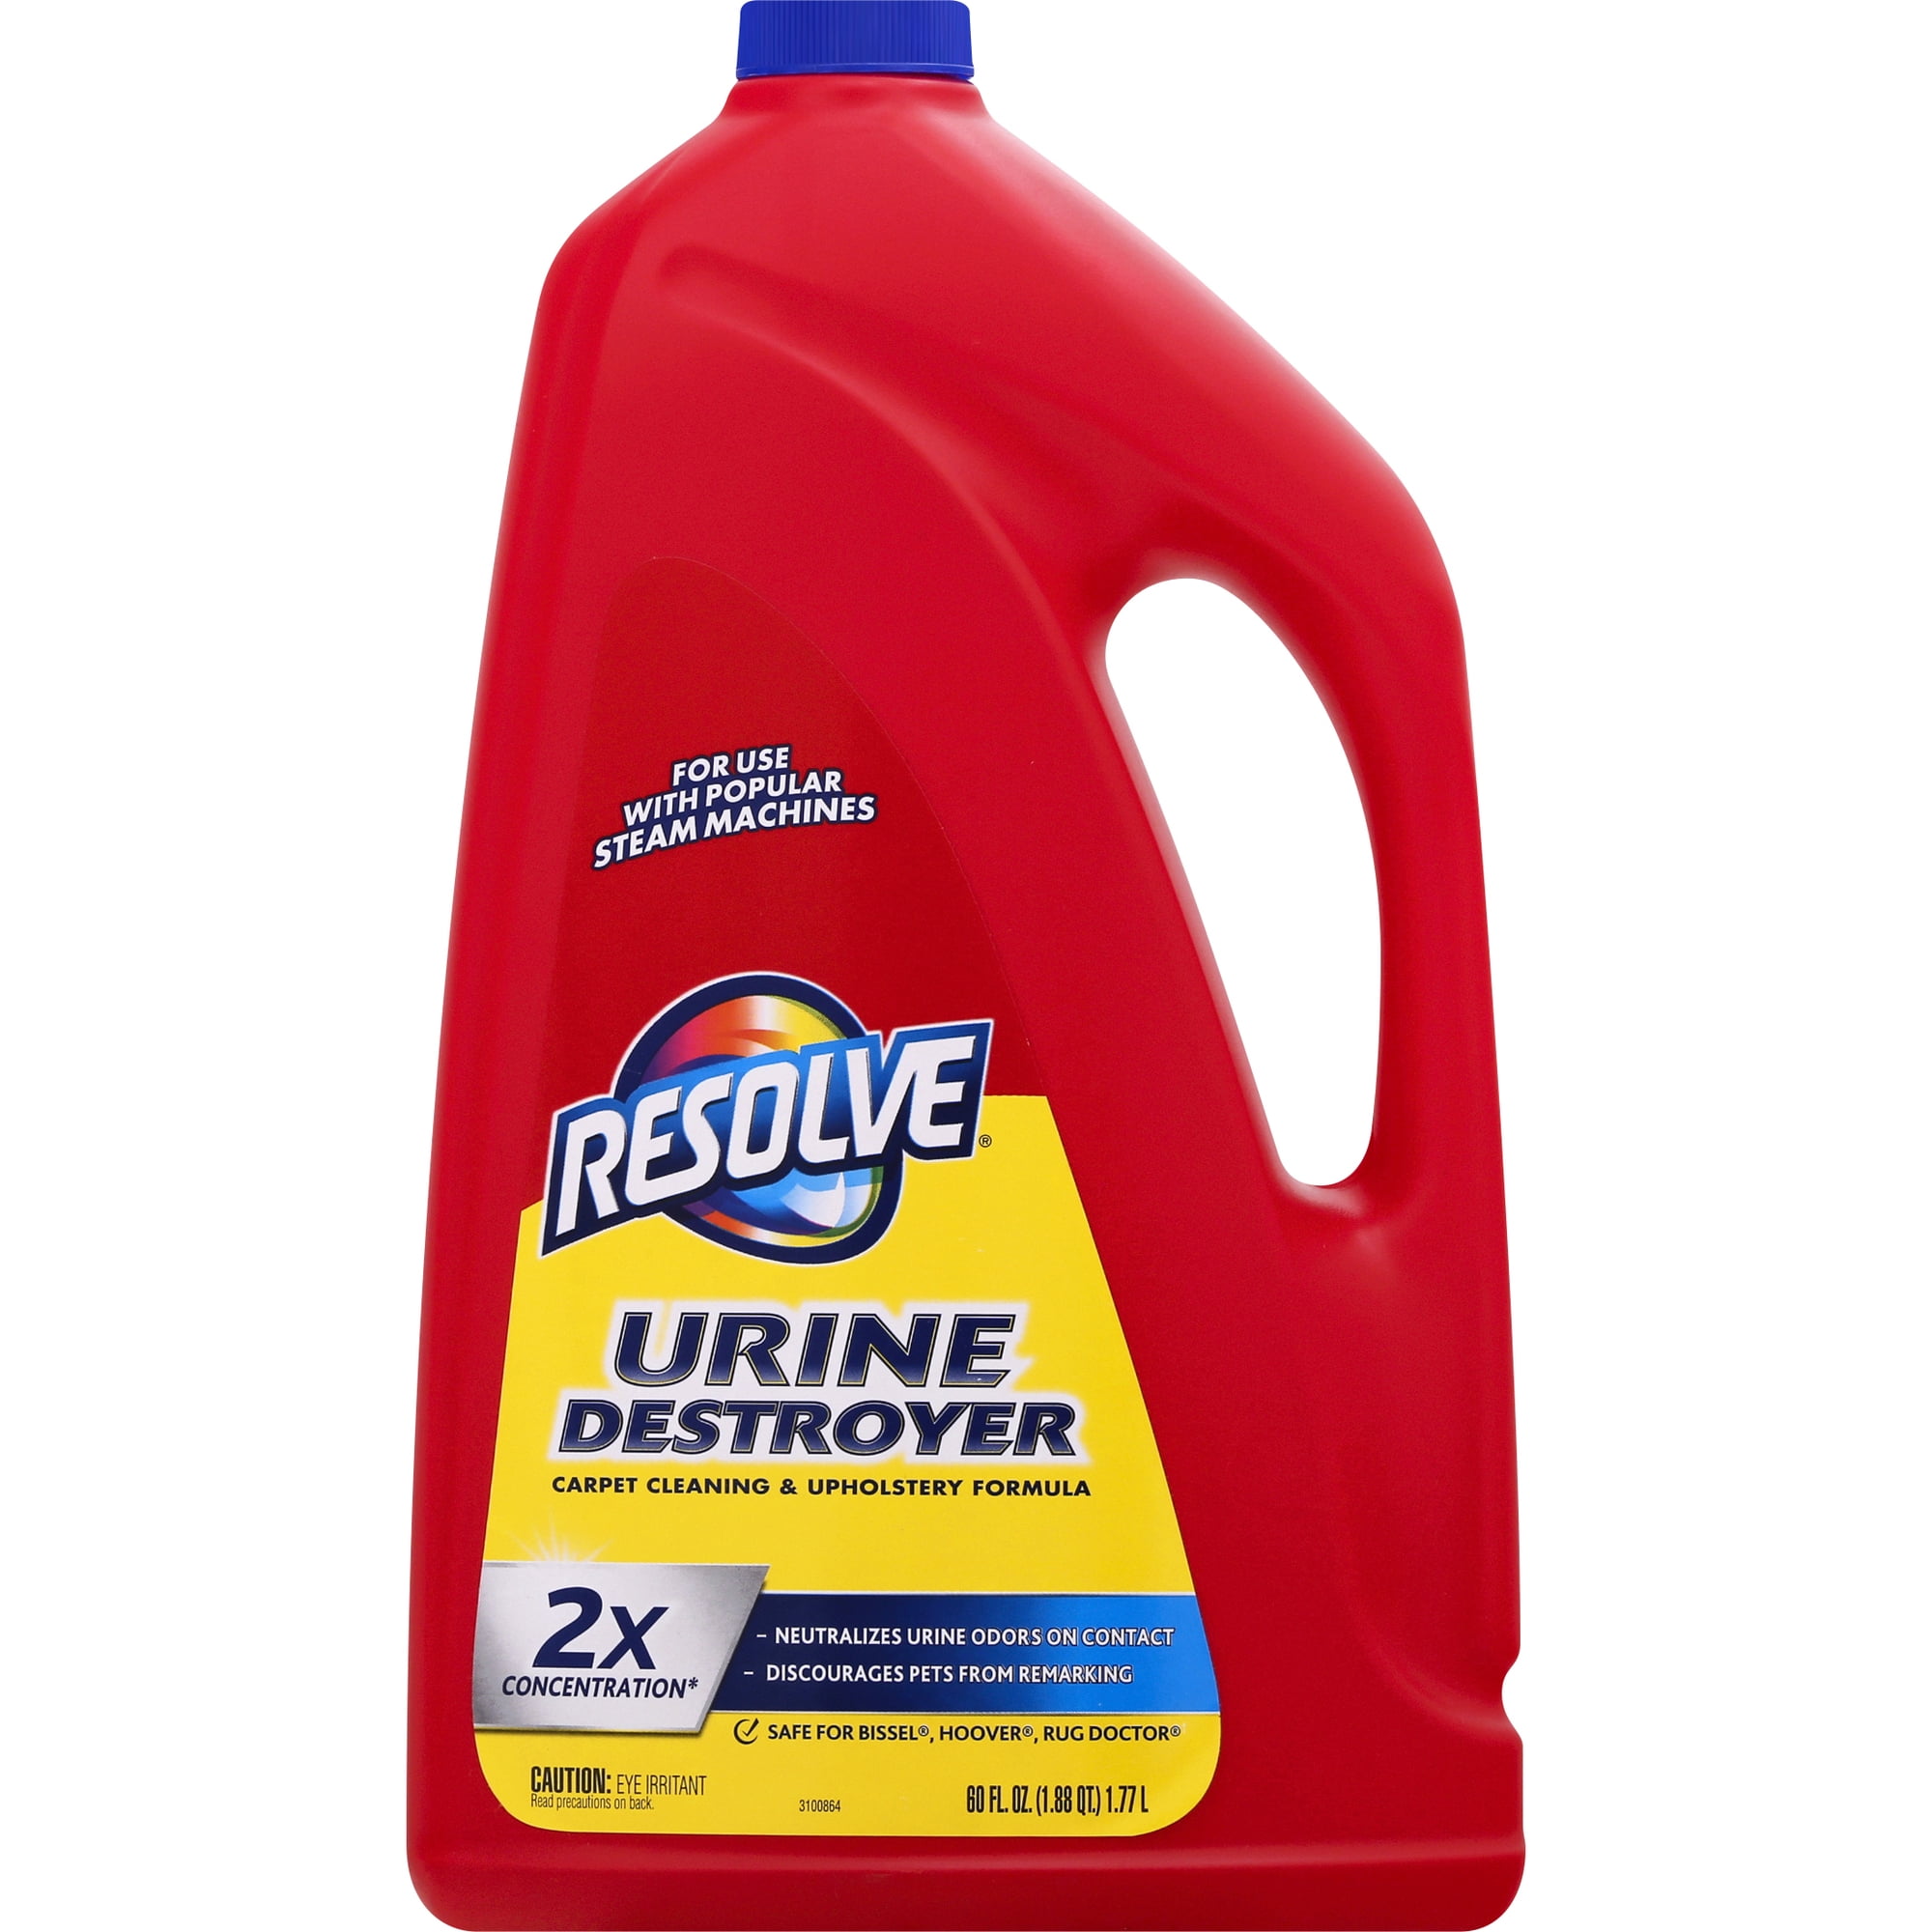 Resolve Urine Destroyer 2x Carpet, Can You Use Resolve Carpet Cleaner On Car Seats